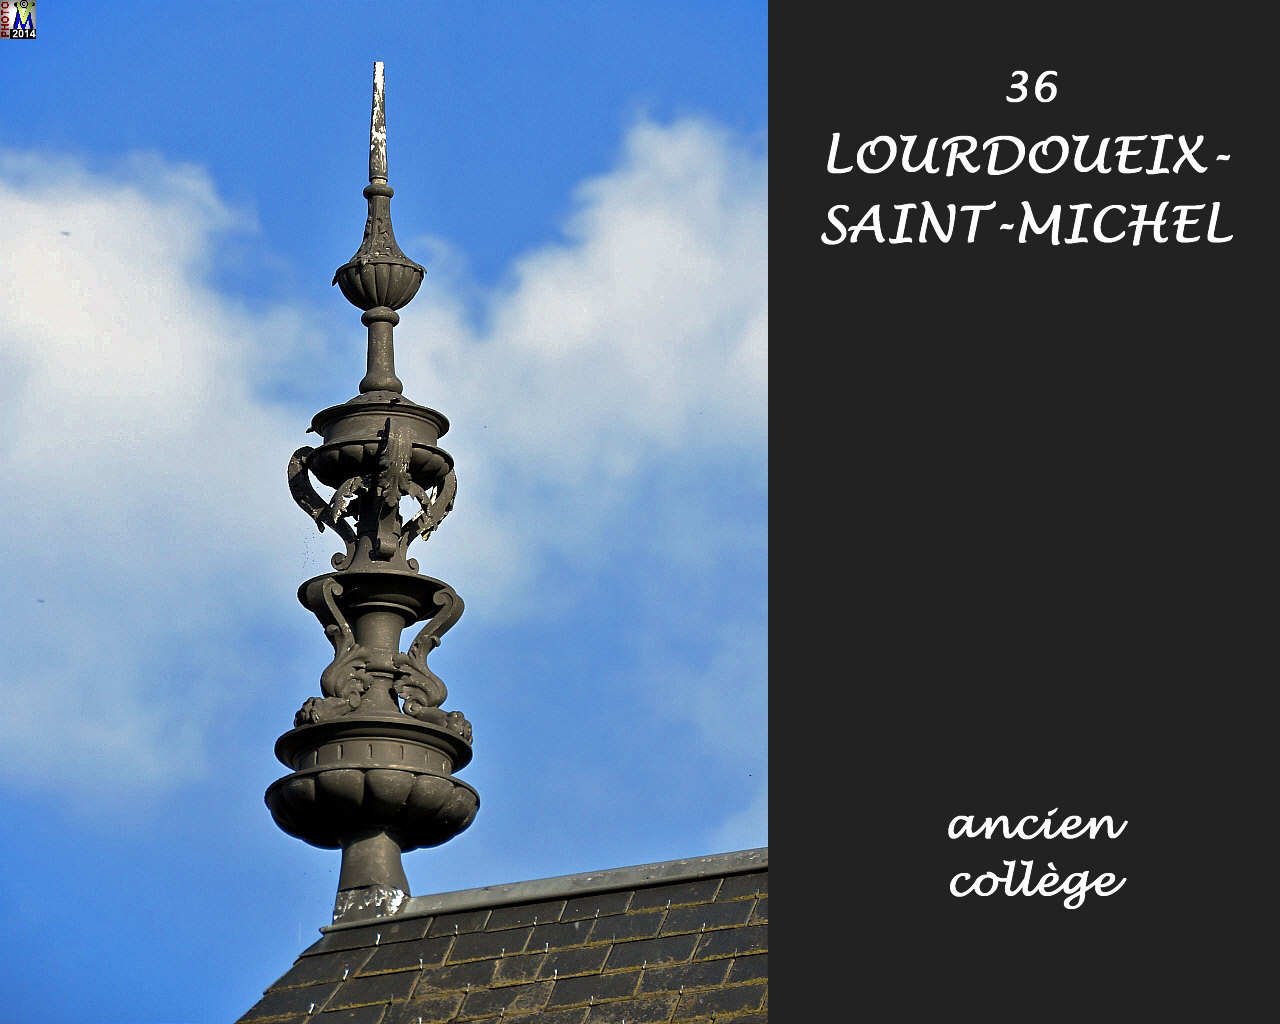 36LOURDOUEIX-St-MICHEL_college_104.jpg